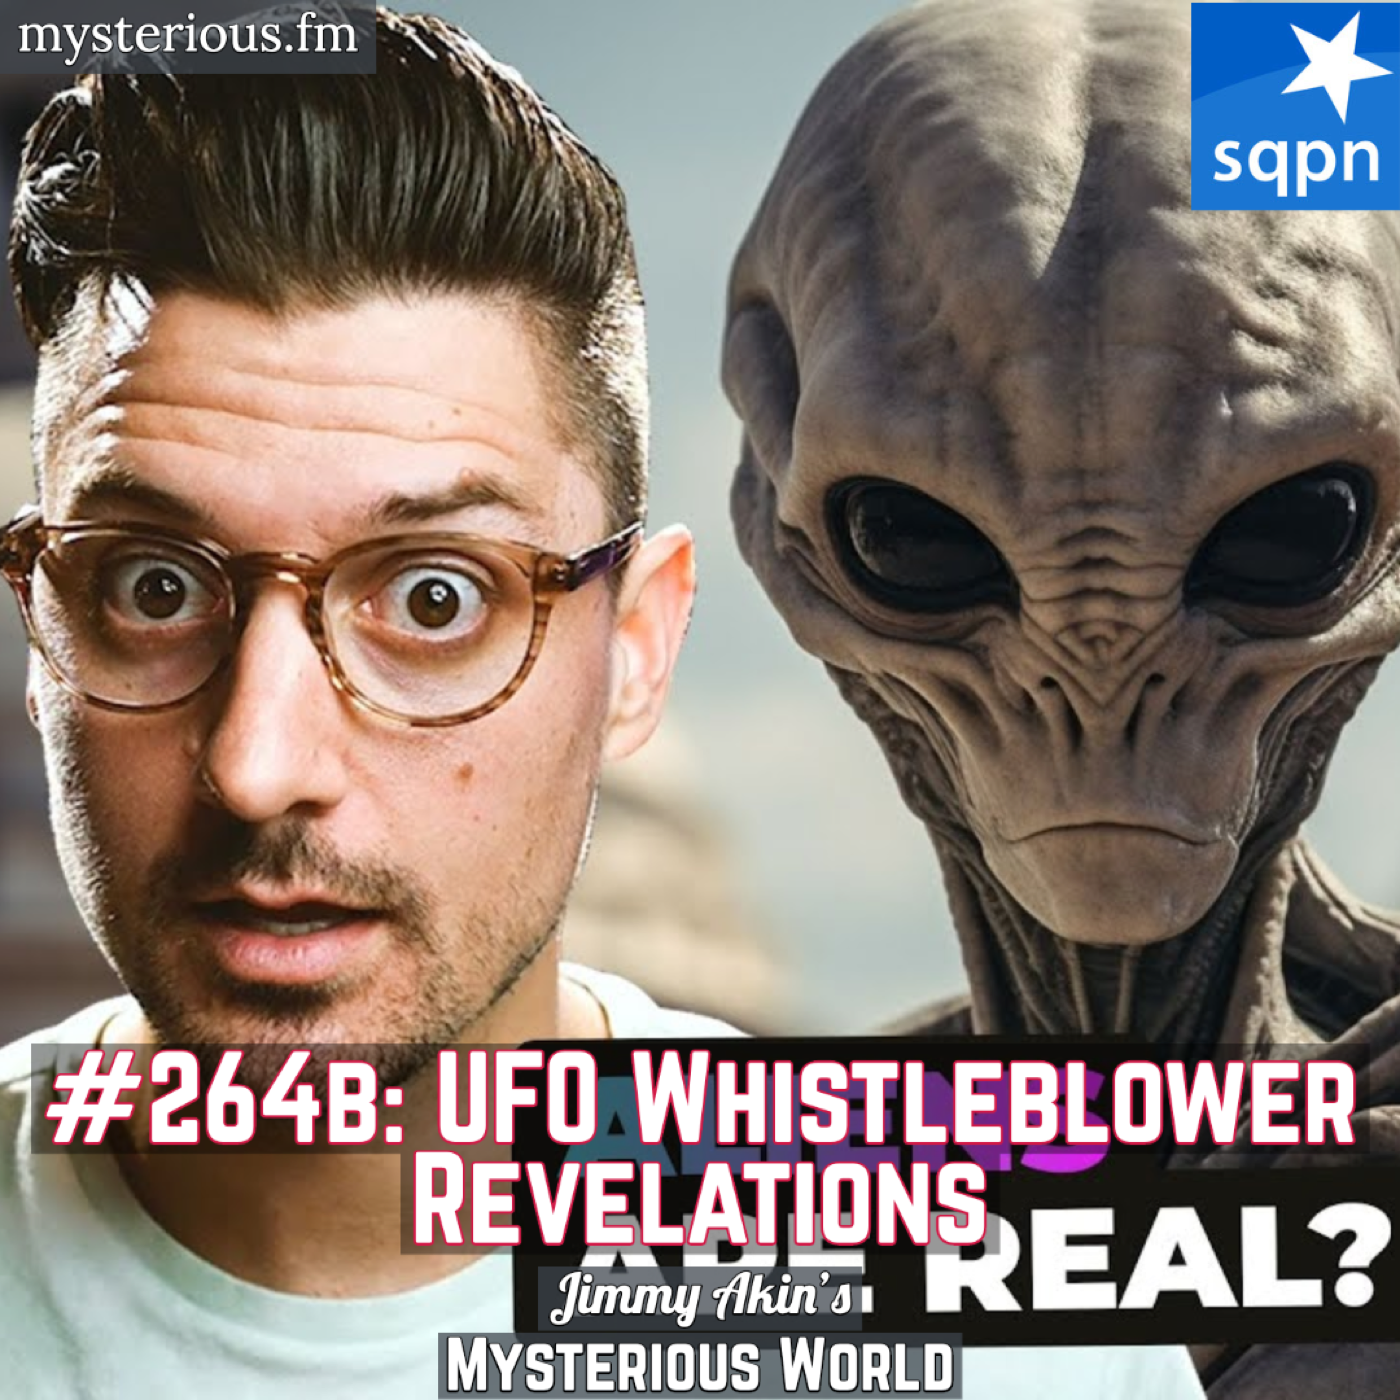 UFO Whistleblower Revelations